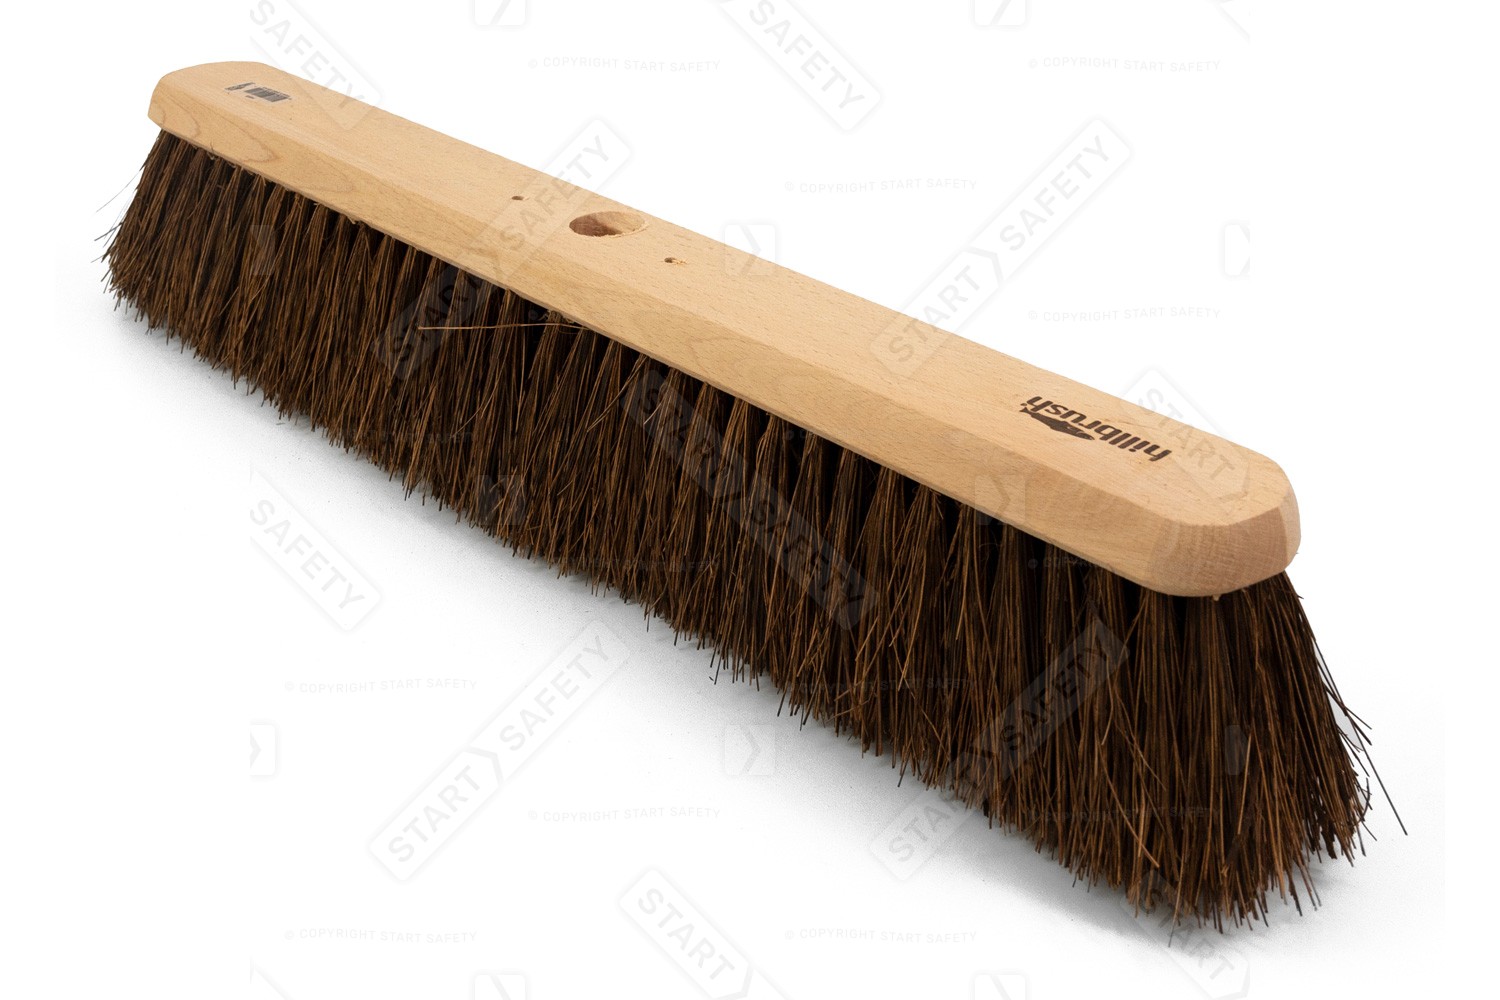 H5/5 Medium Hillbrush Sweeping Broom